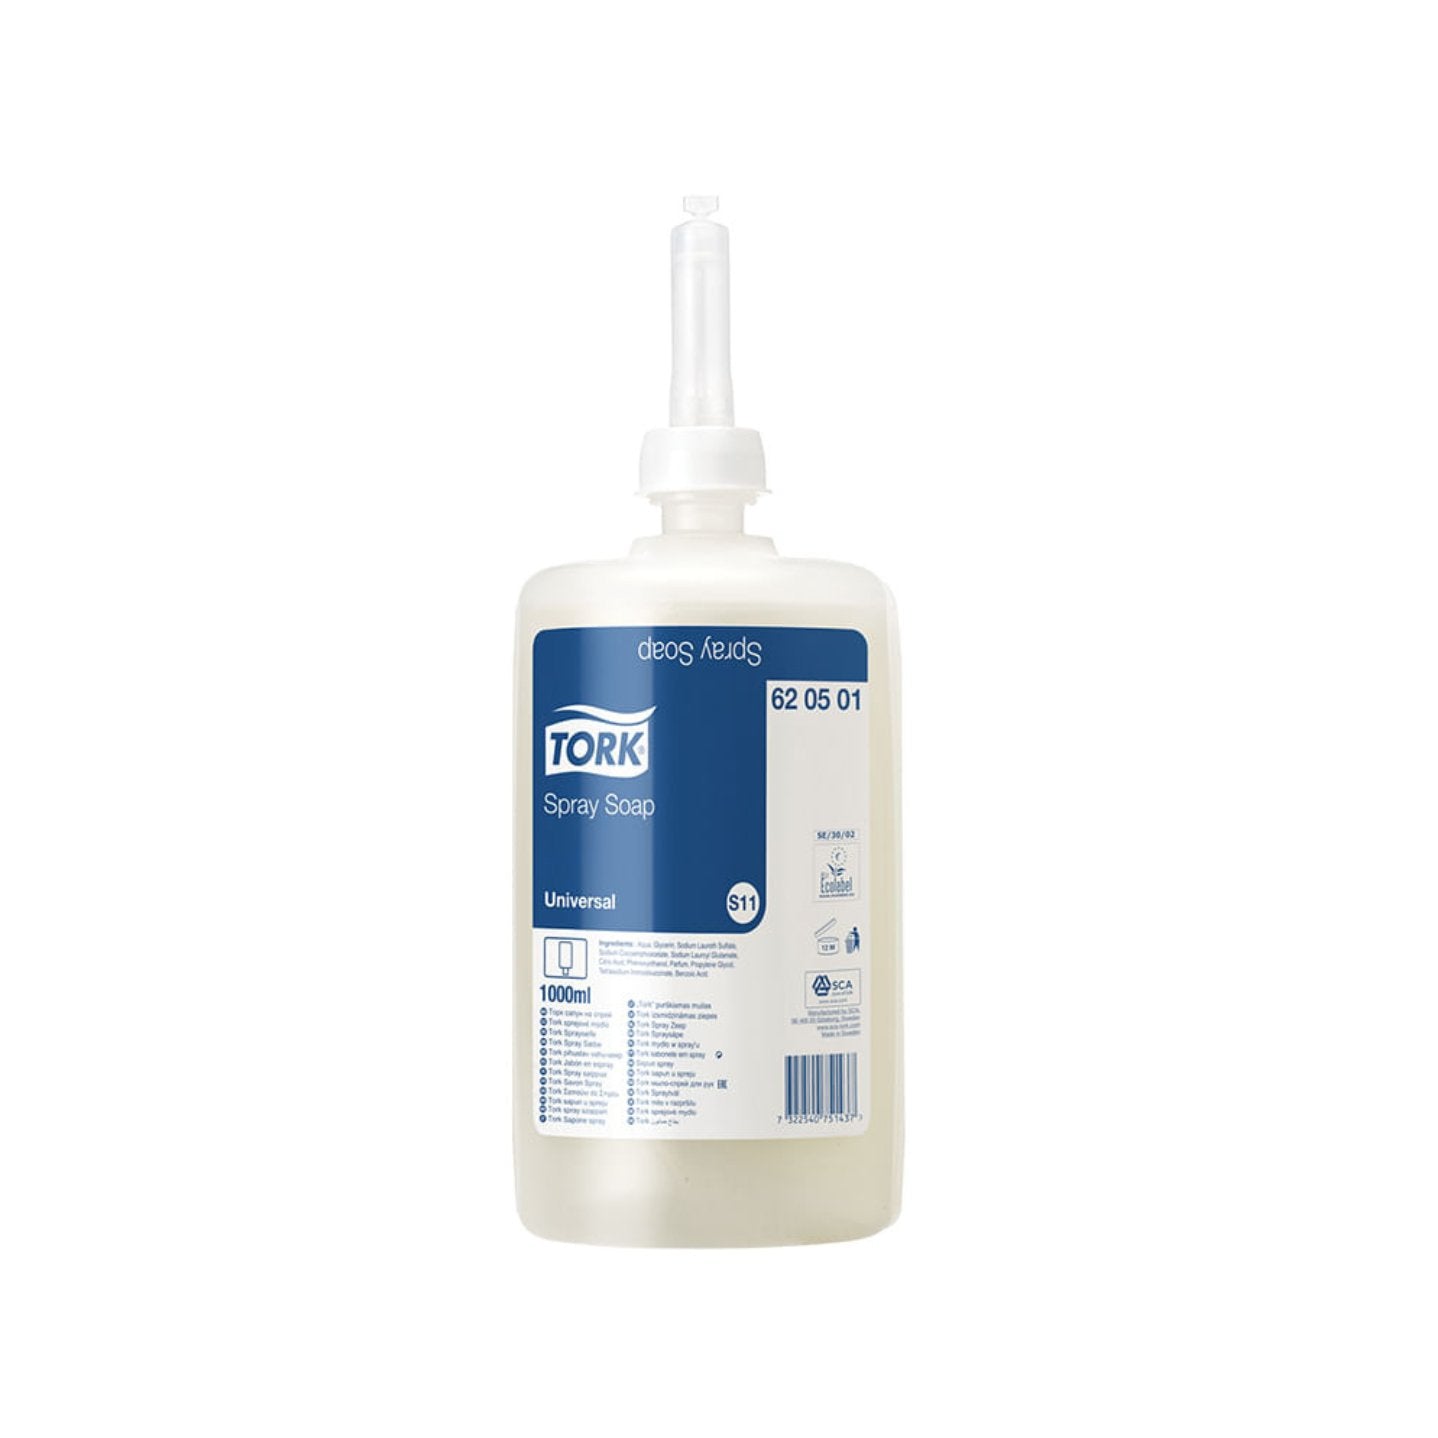 Tork Jabón Spray Universal 1000 mls (620501) - Karlan ¡Marca la Limpieza!620501